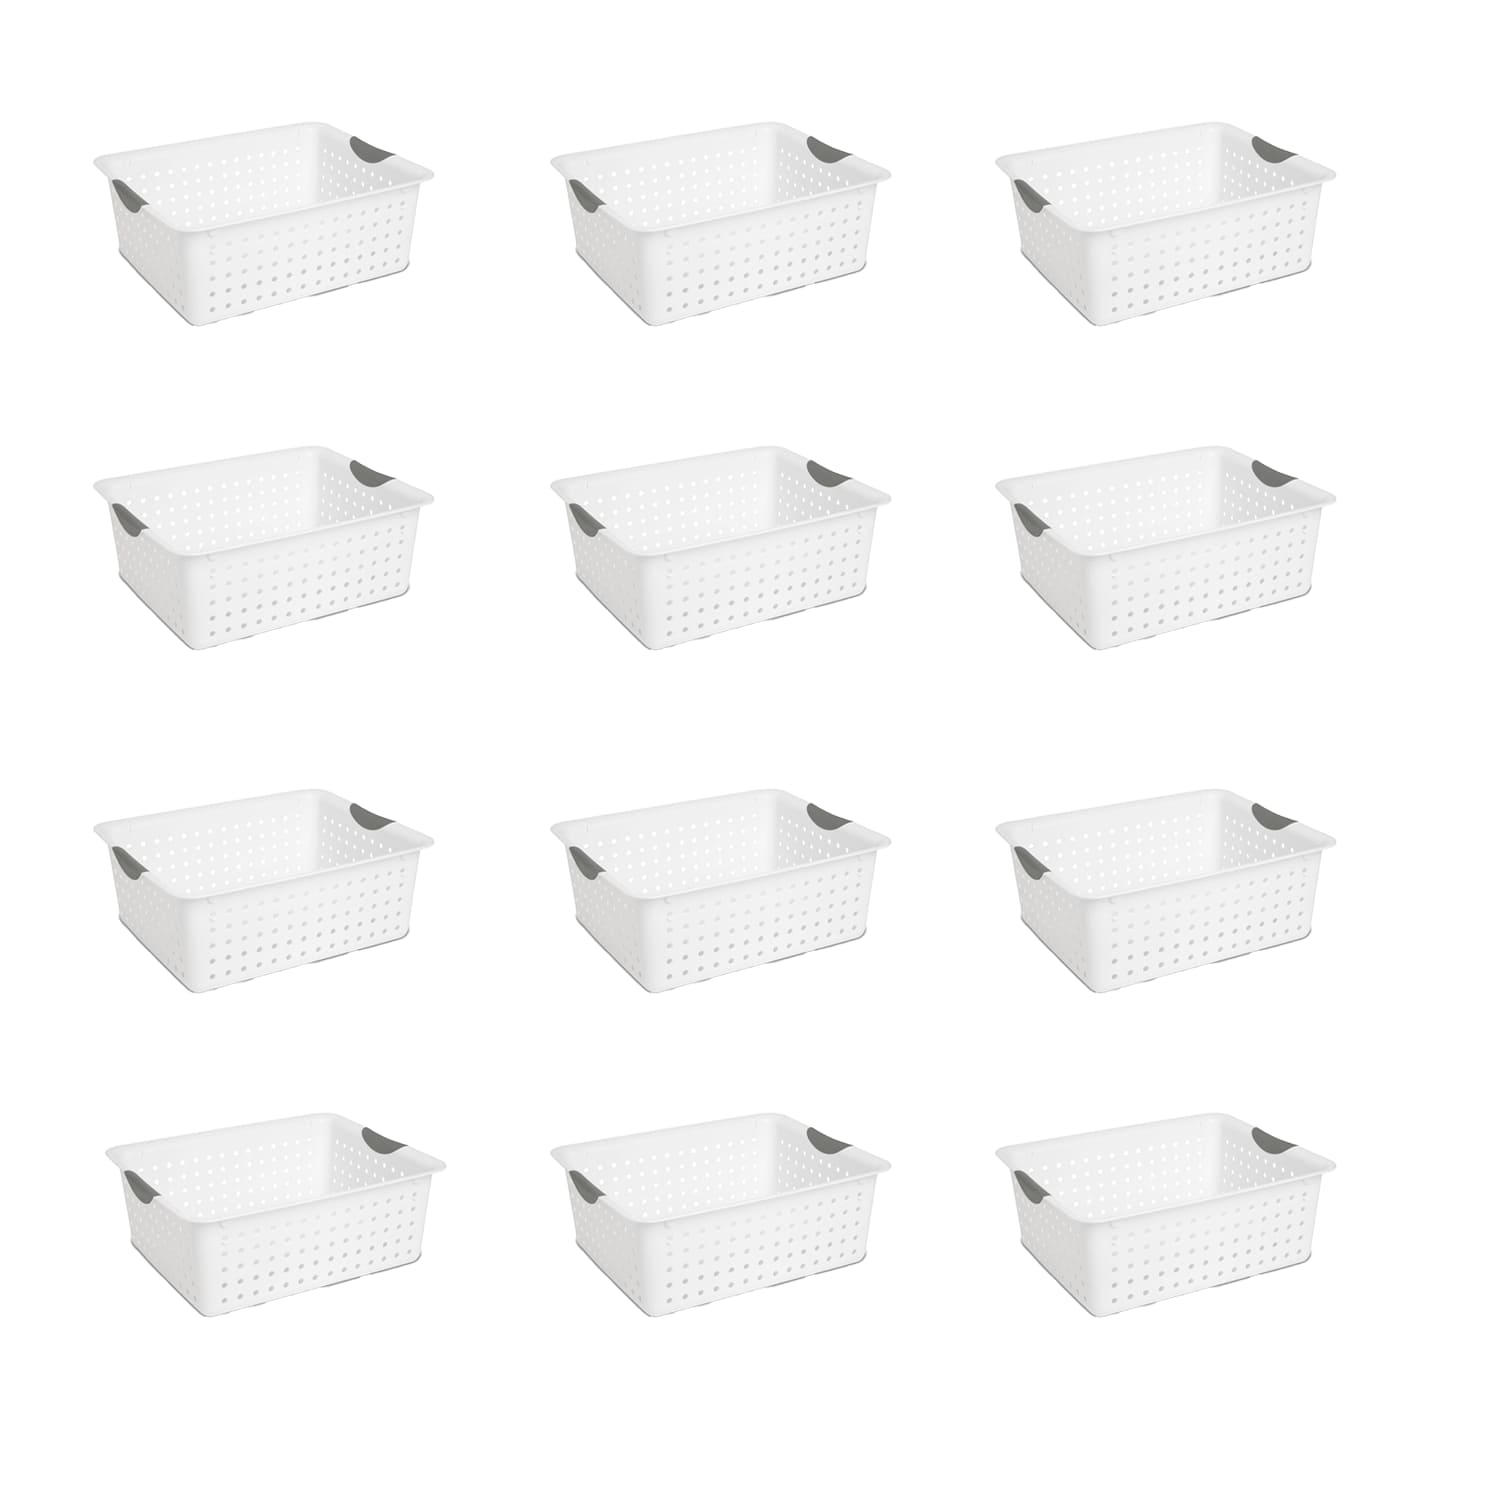 Sterilite Large Ultra Plastic Storage Baskets w/ Handles, White, 30 Pack 